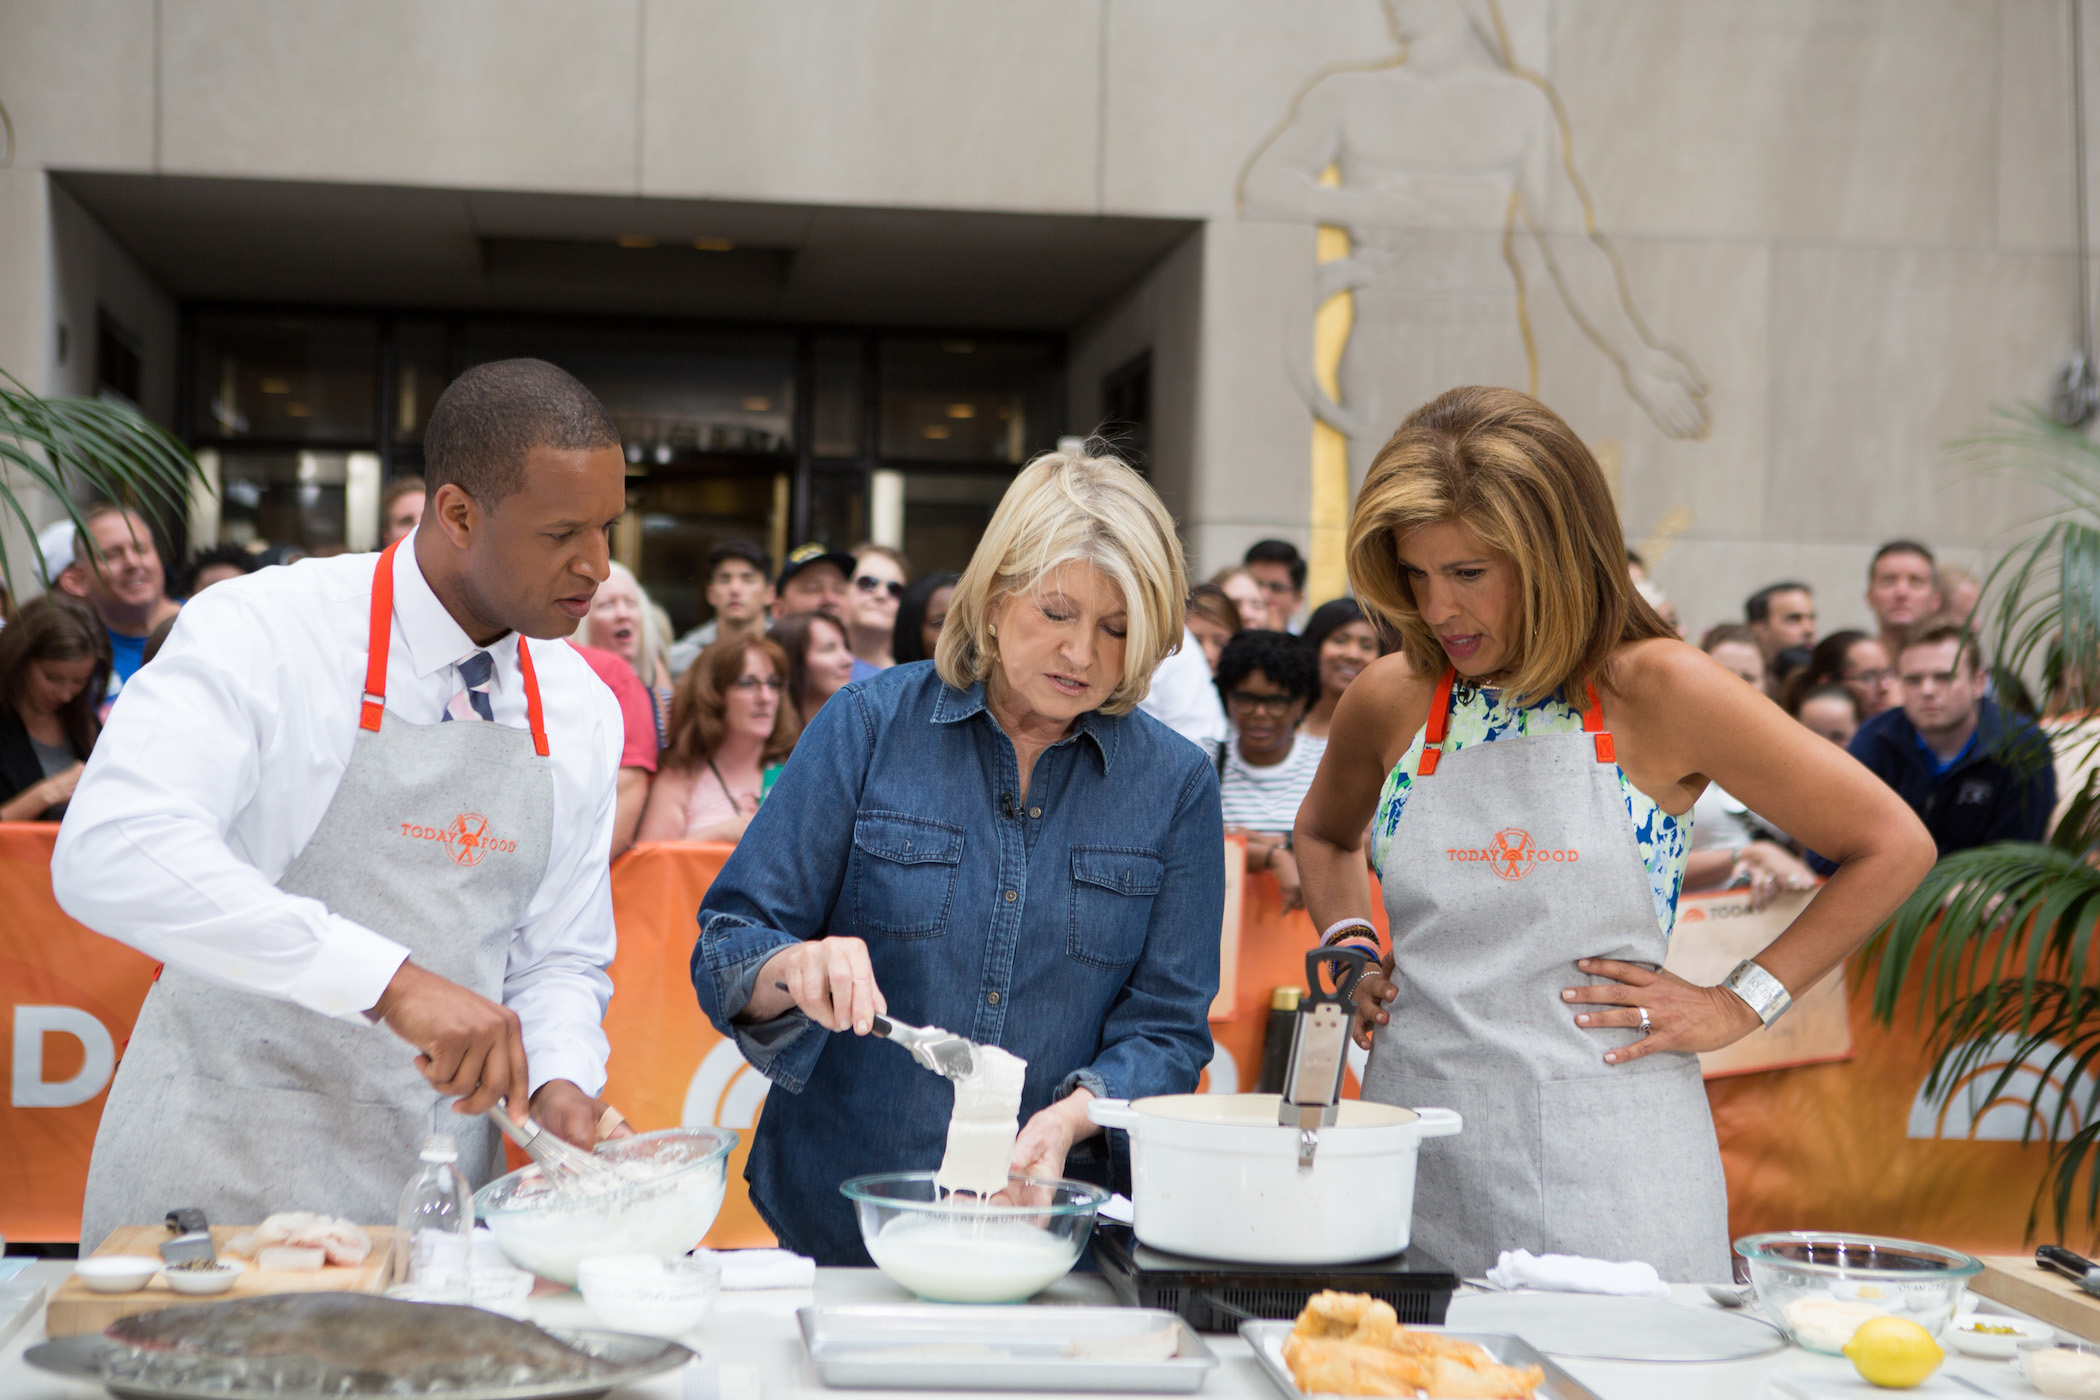 Craig Melvin, Martha Stewart, and Hoda Kotb around a burner cooking Martha Stewart's recipe